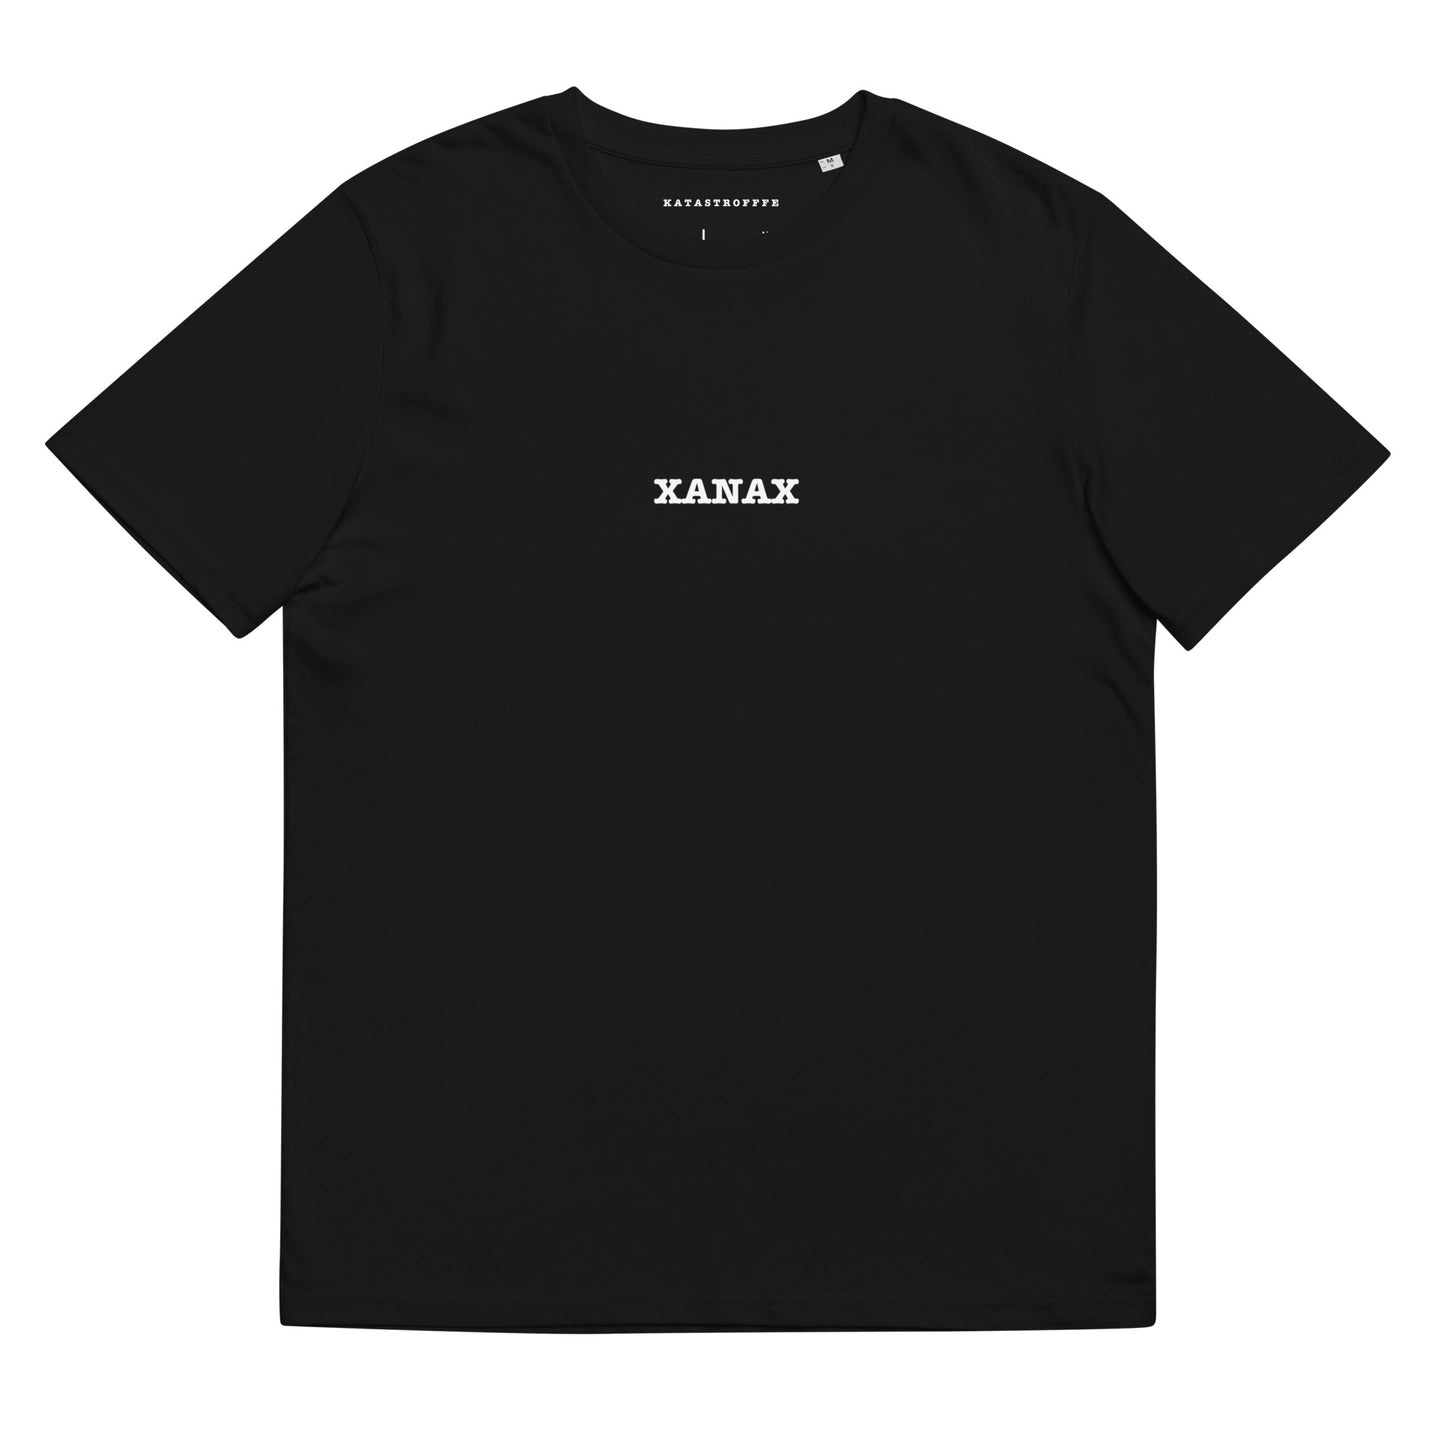 XANAX Black Katastrofffe Unisex organic cotton t-shirt